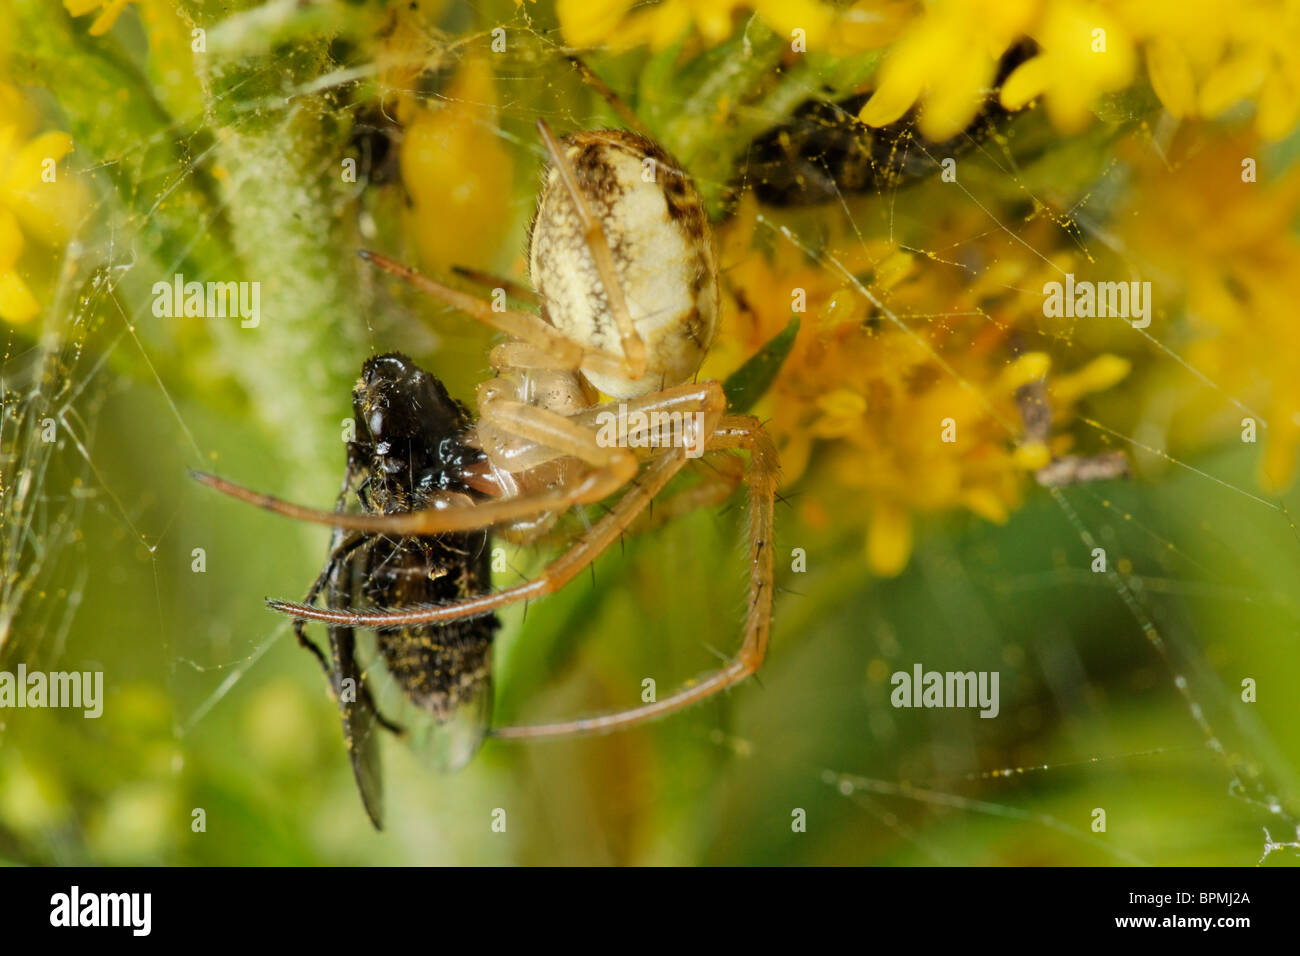 Spider with prey Stock Photo